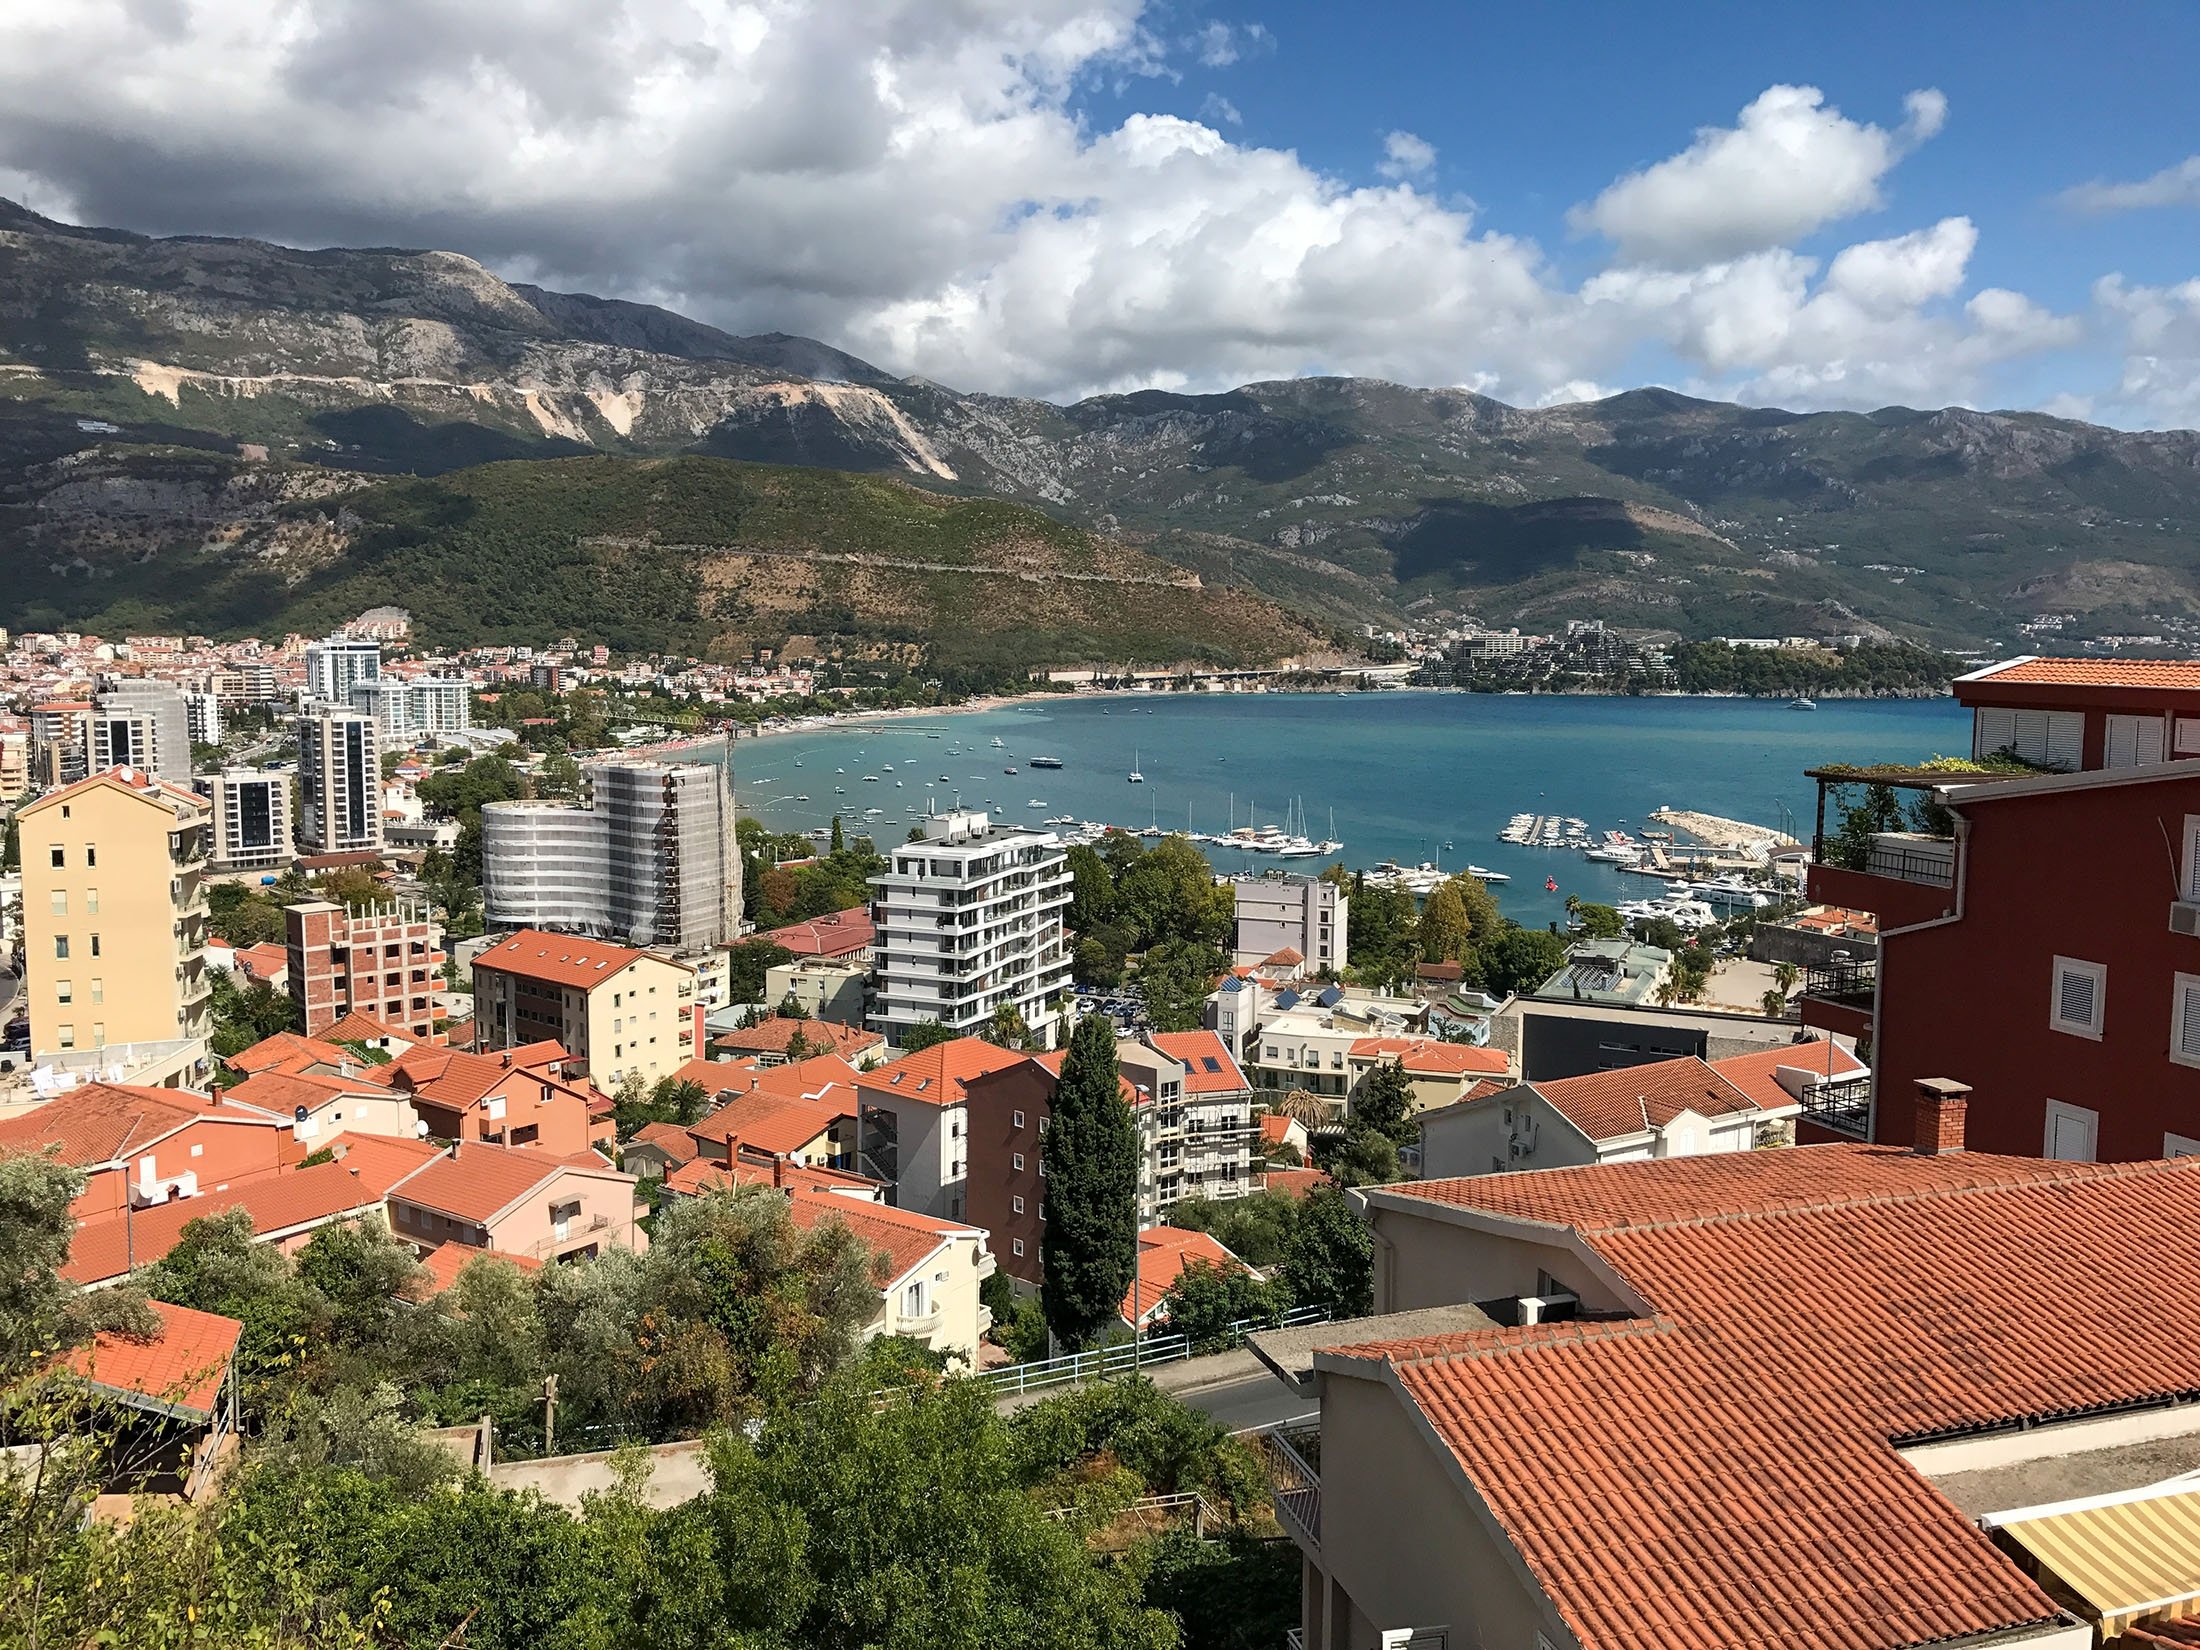 The city of Budva, Montenegro. (Photo by Özge Şengelen)